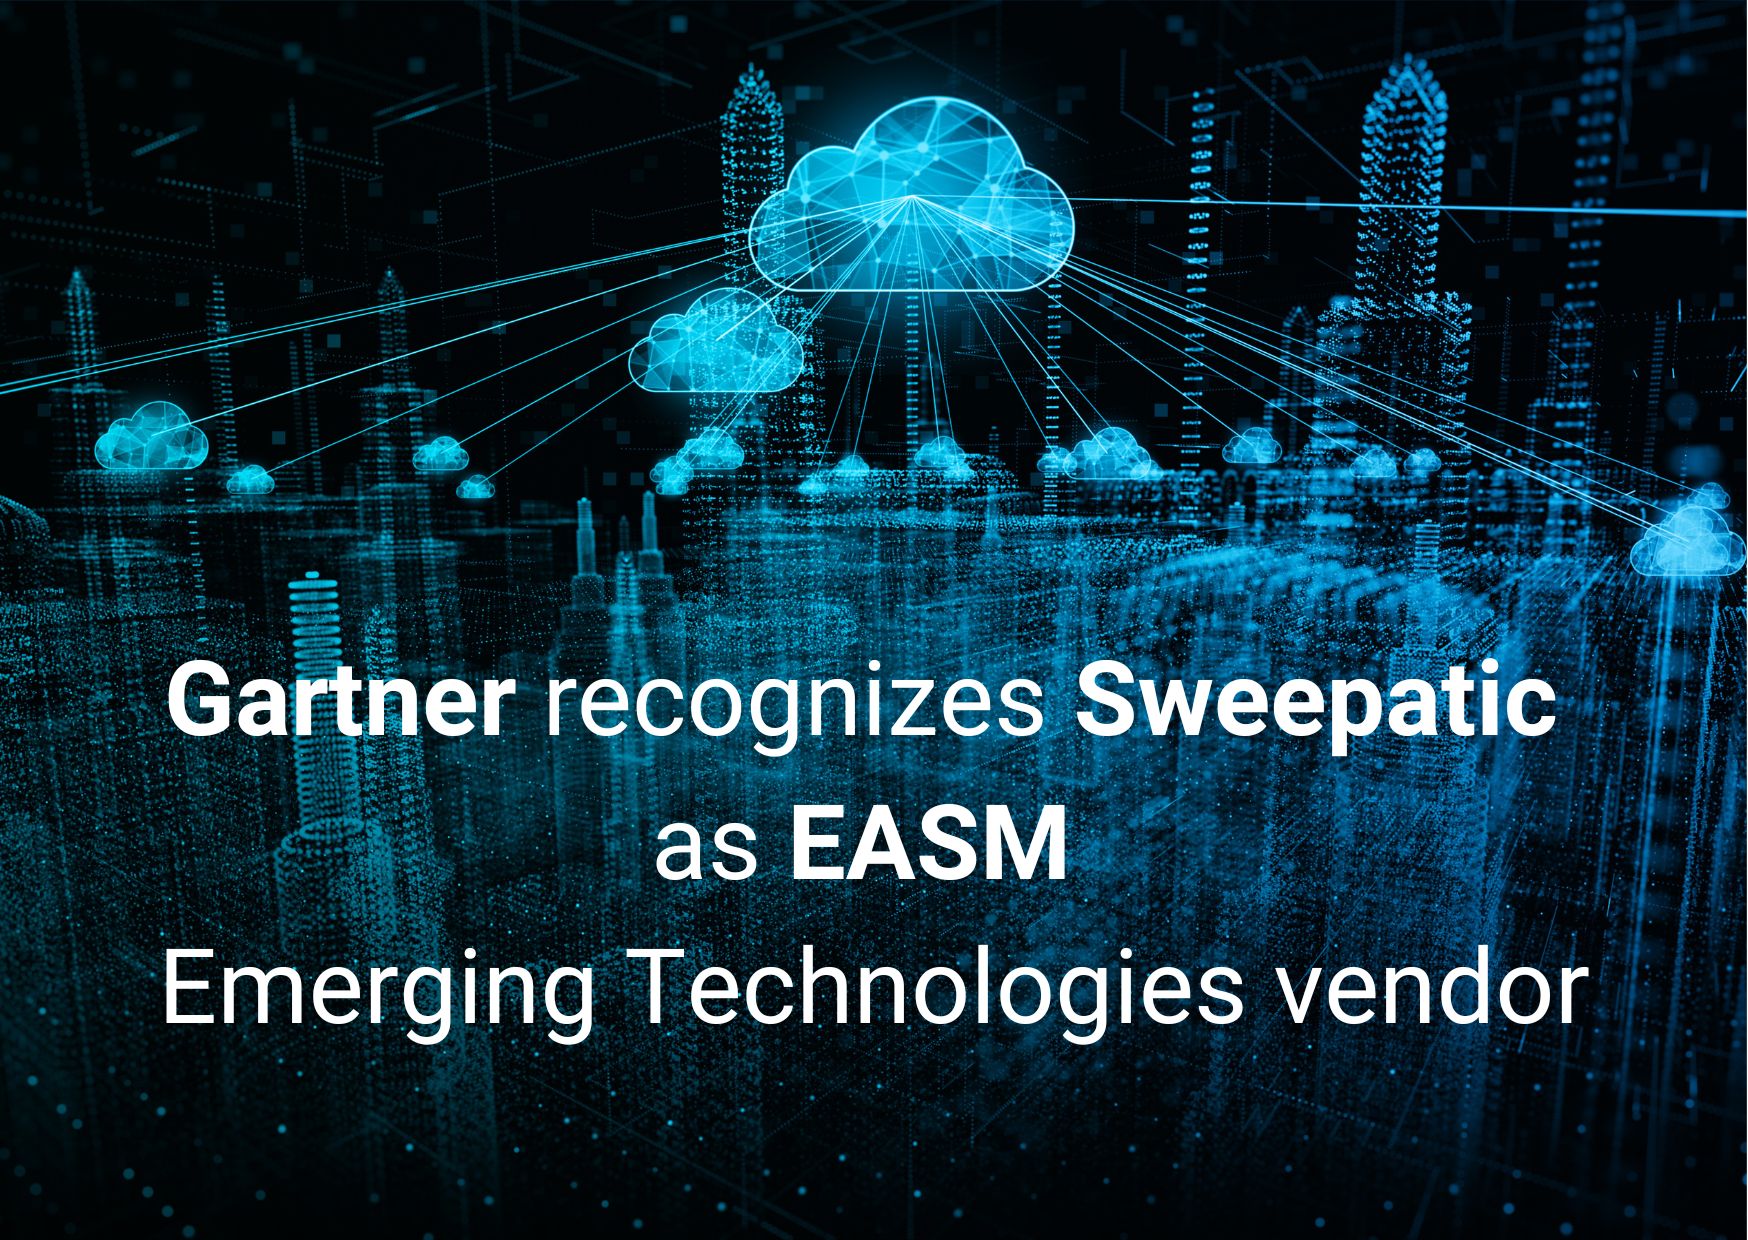 Gartner recognizes Sweepatic as EASM vendor